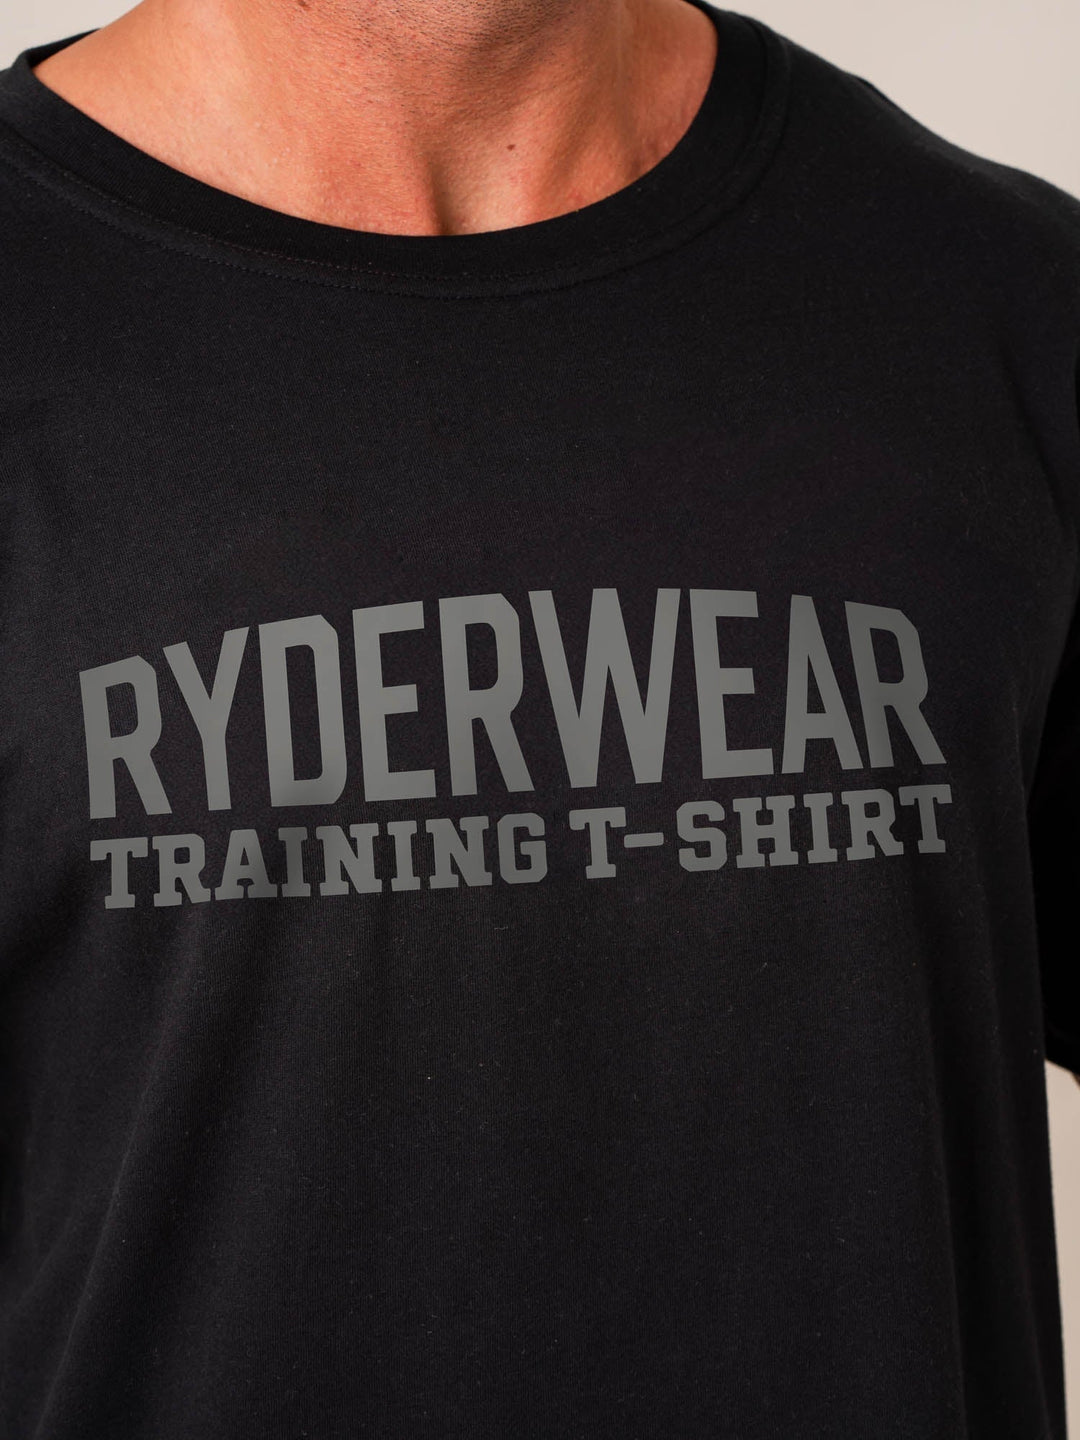 Ryderwear Training T-Shirt - Black Clothing Ryderwear 